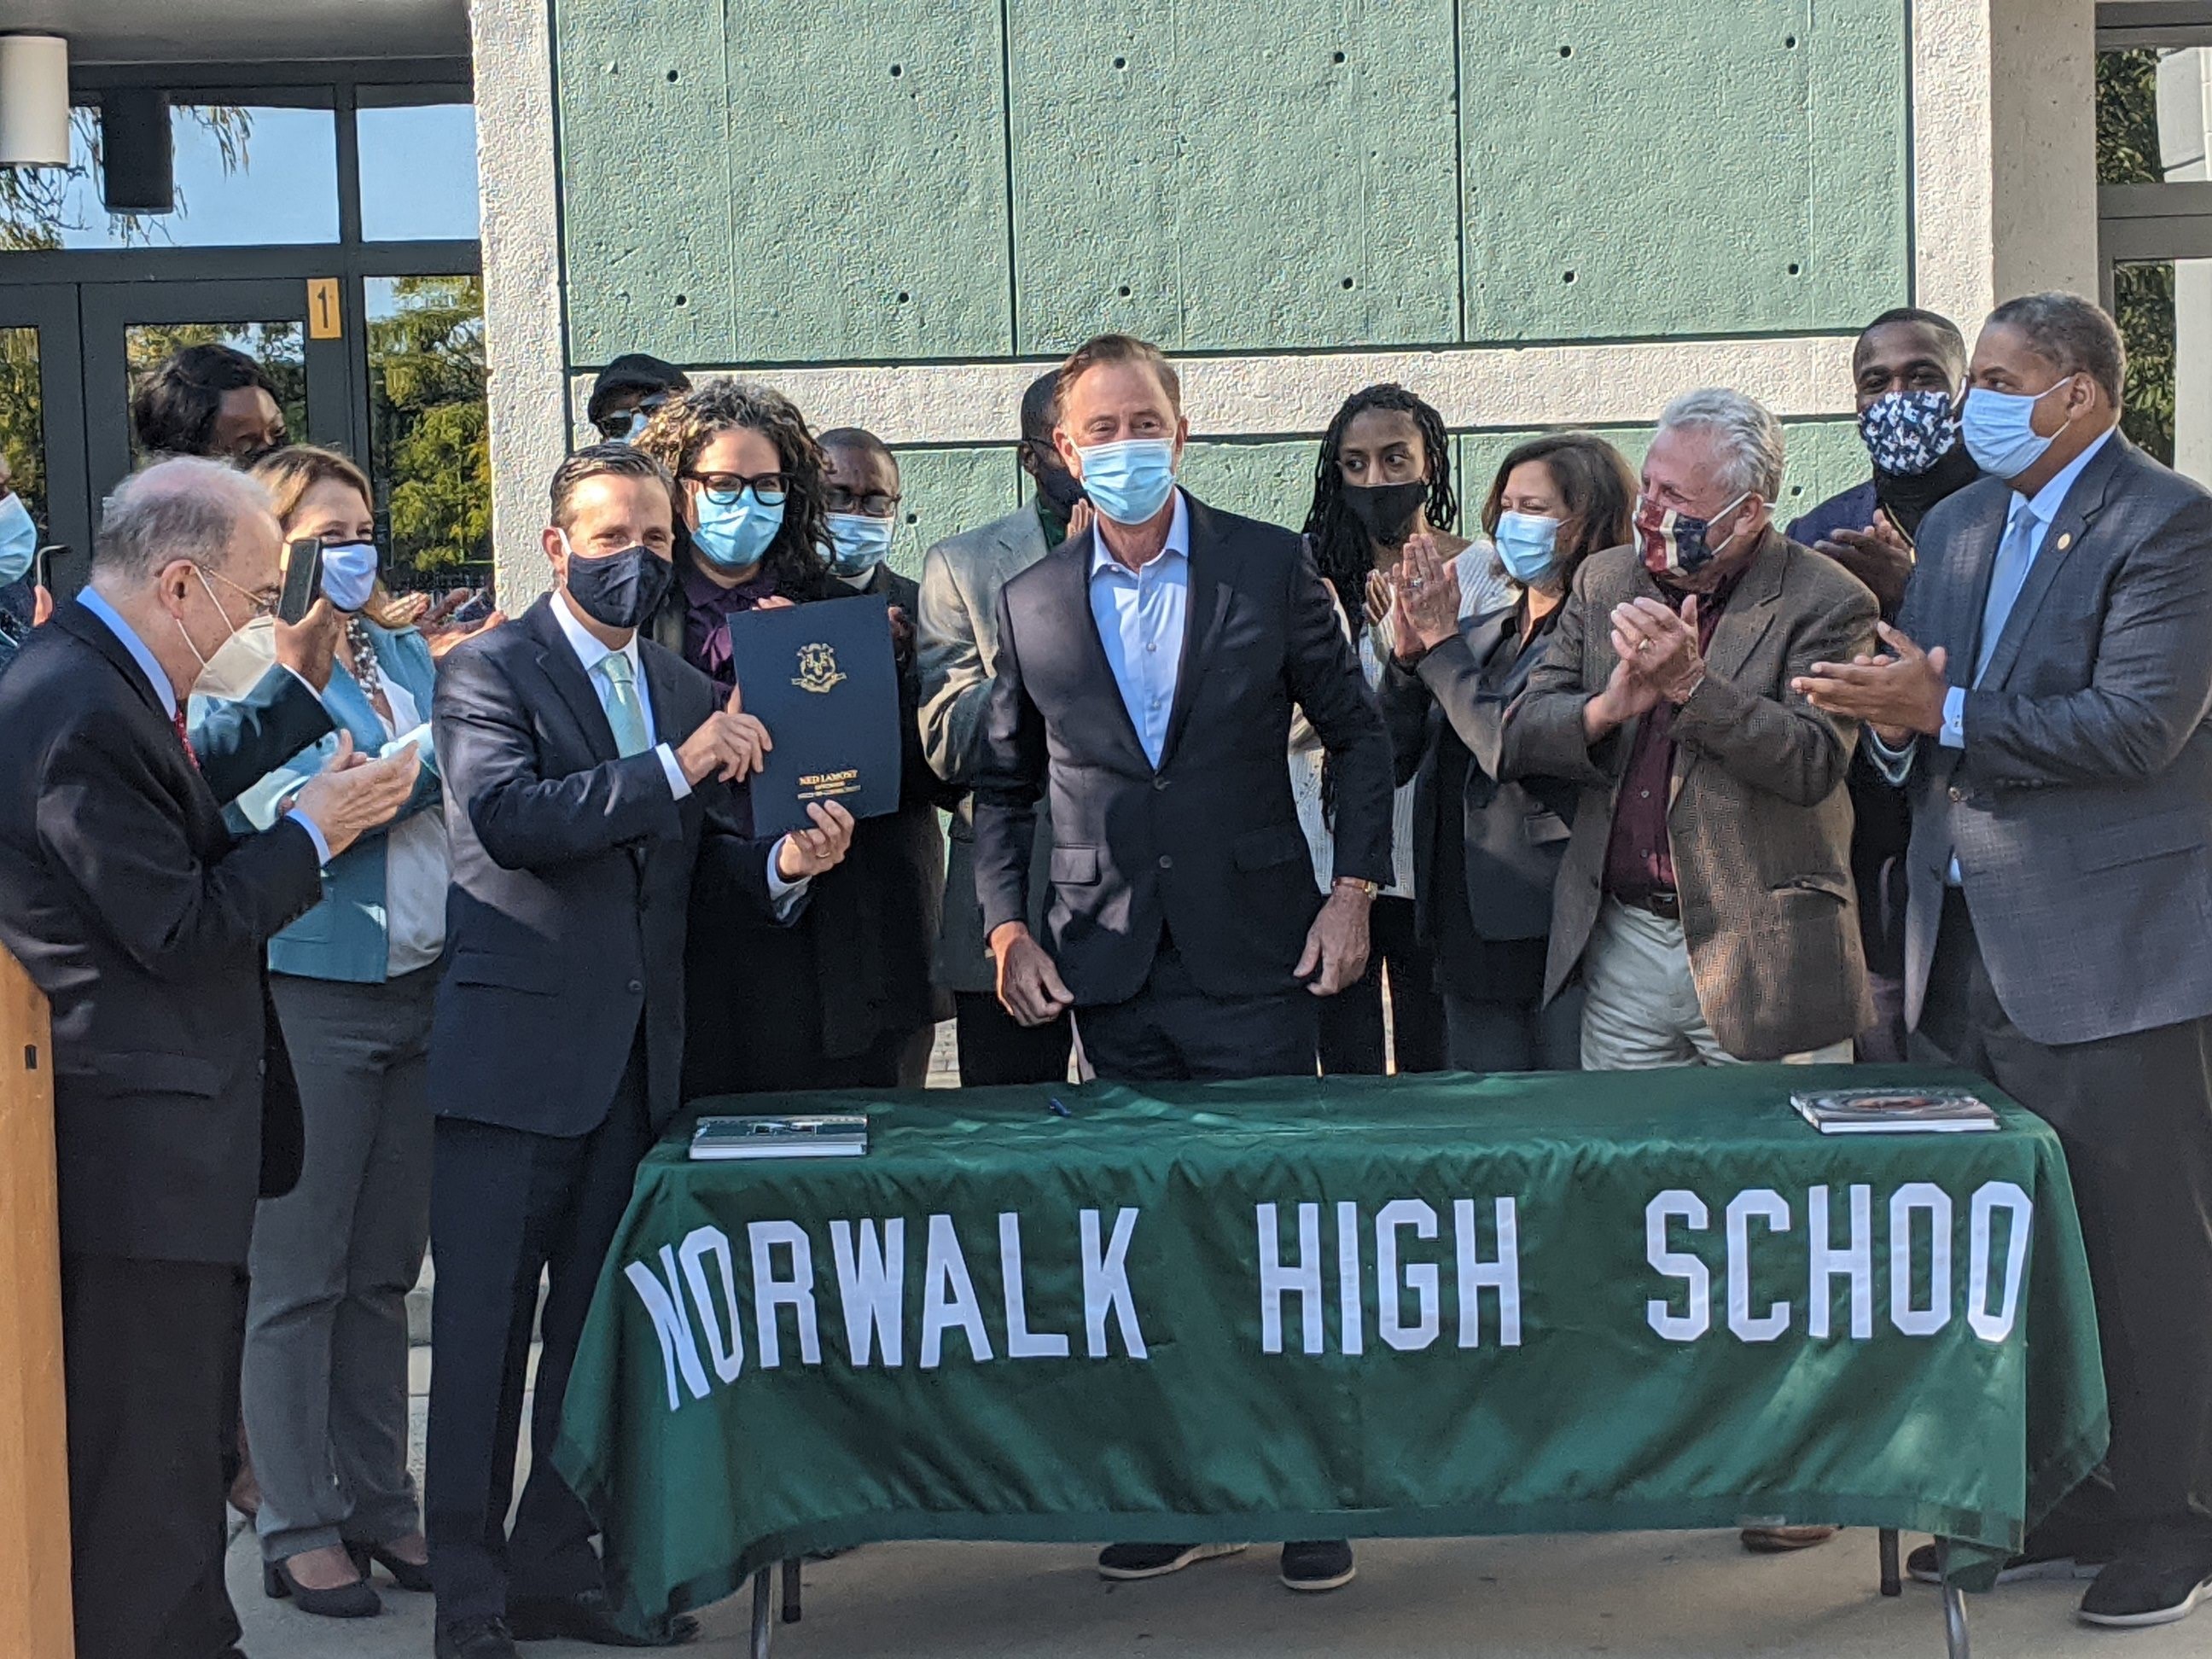 Norwalk High School Funding